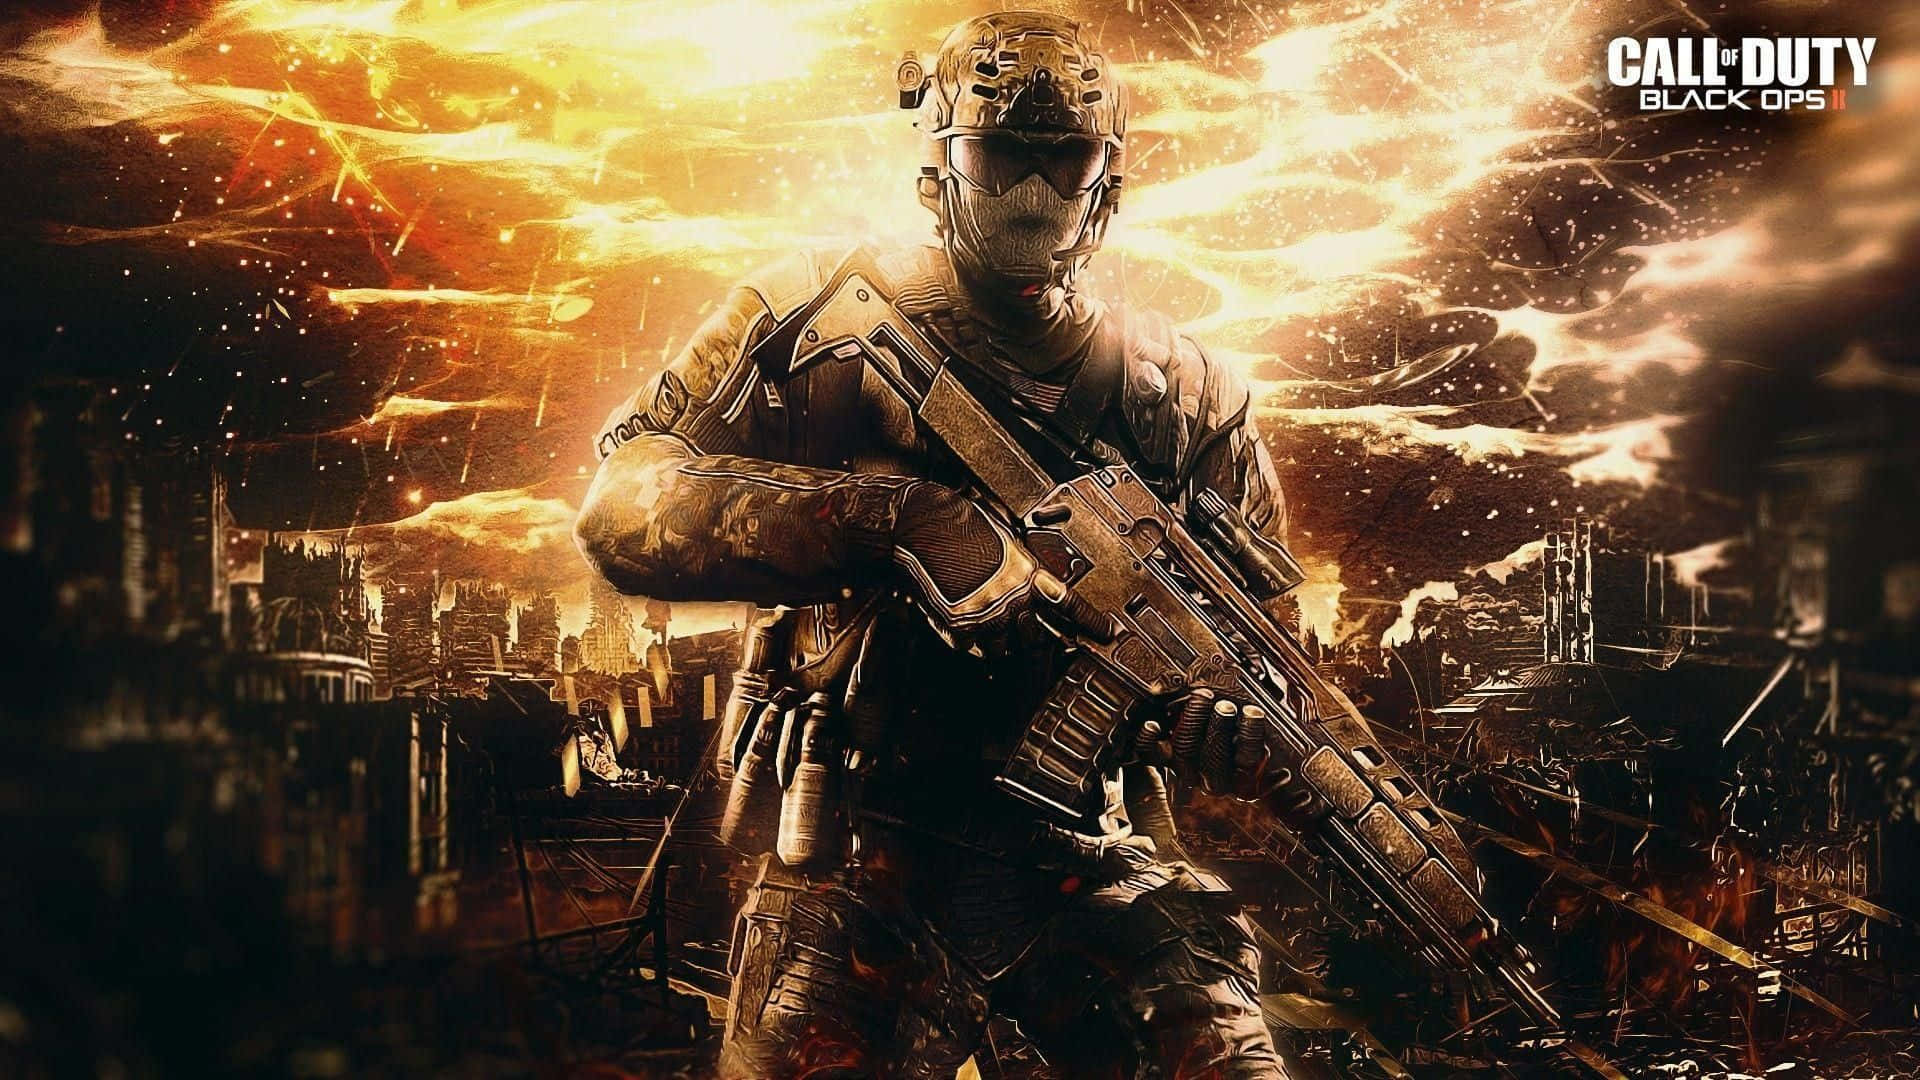 Spielecall Of Duty, Um Dich Dem Kampf Von Gut Gegen Böse Anzuschließen